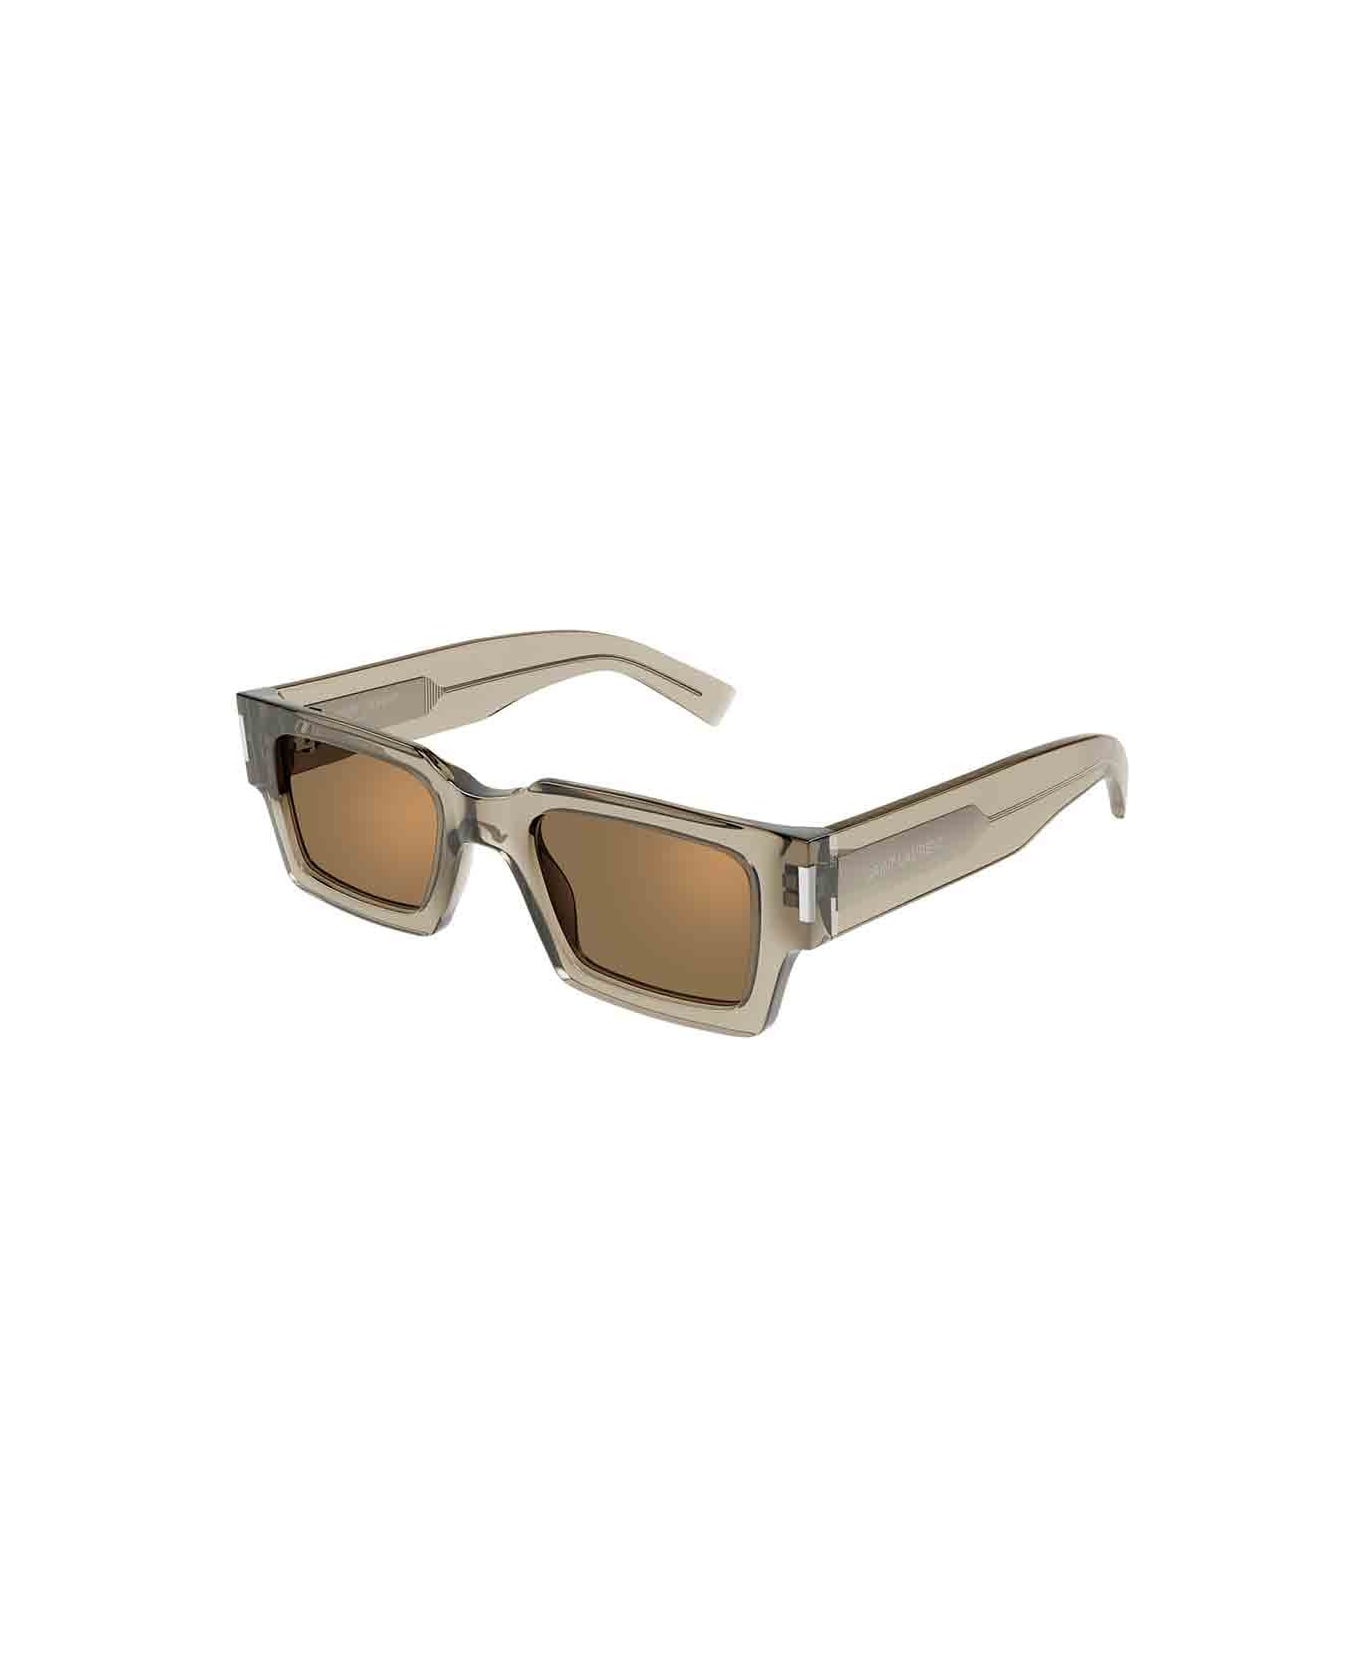 Saint Laurent Eyewear Sunglasses - Giallo/Marrone